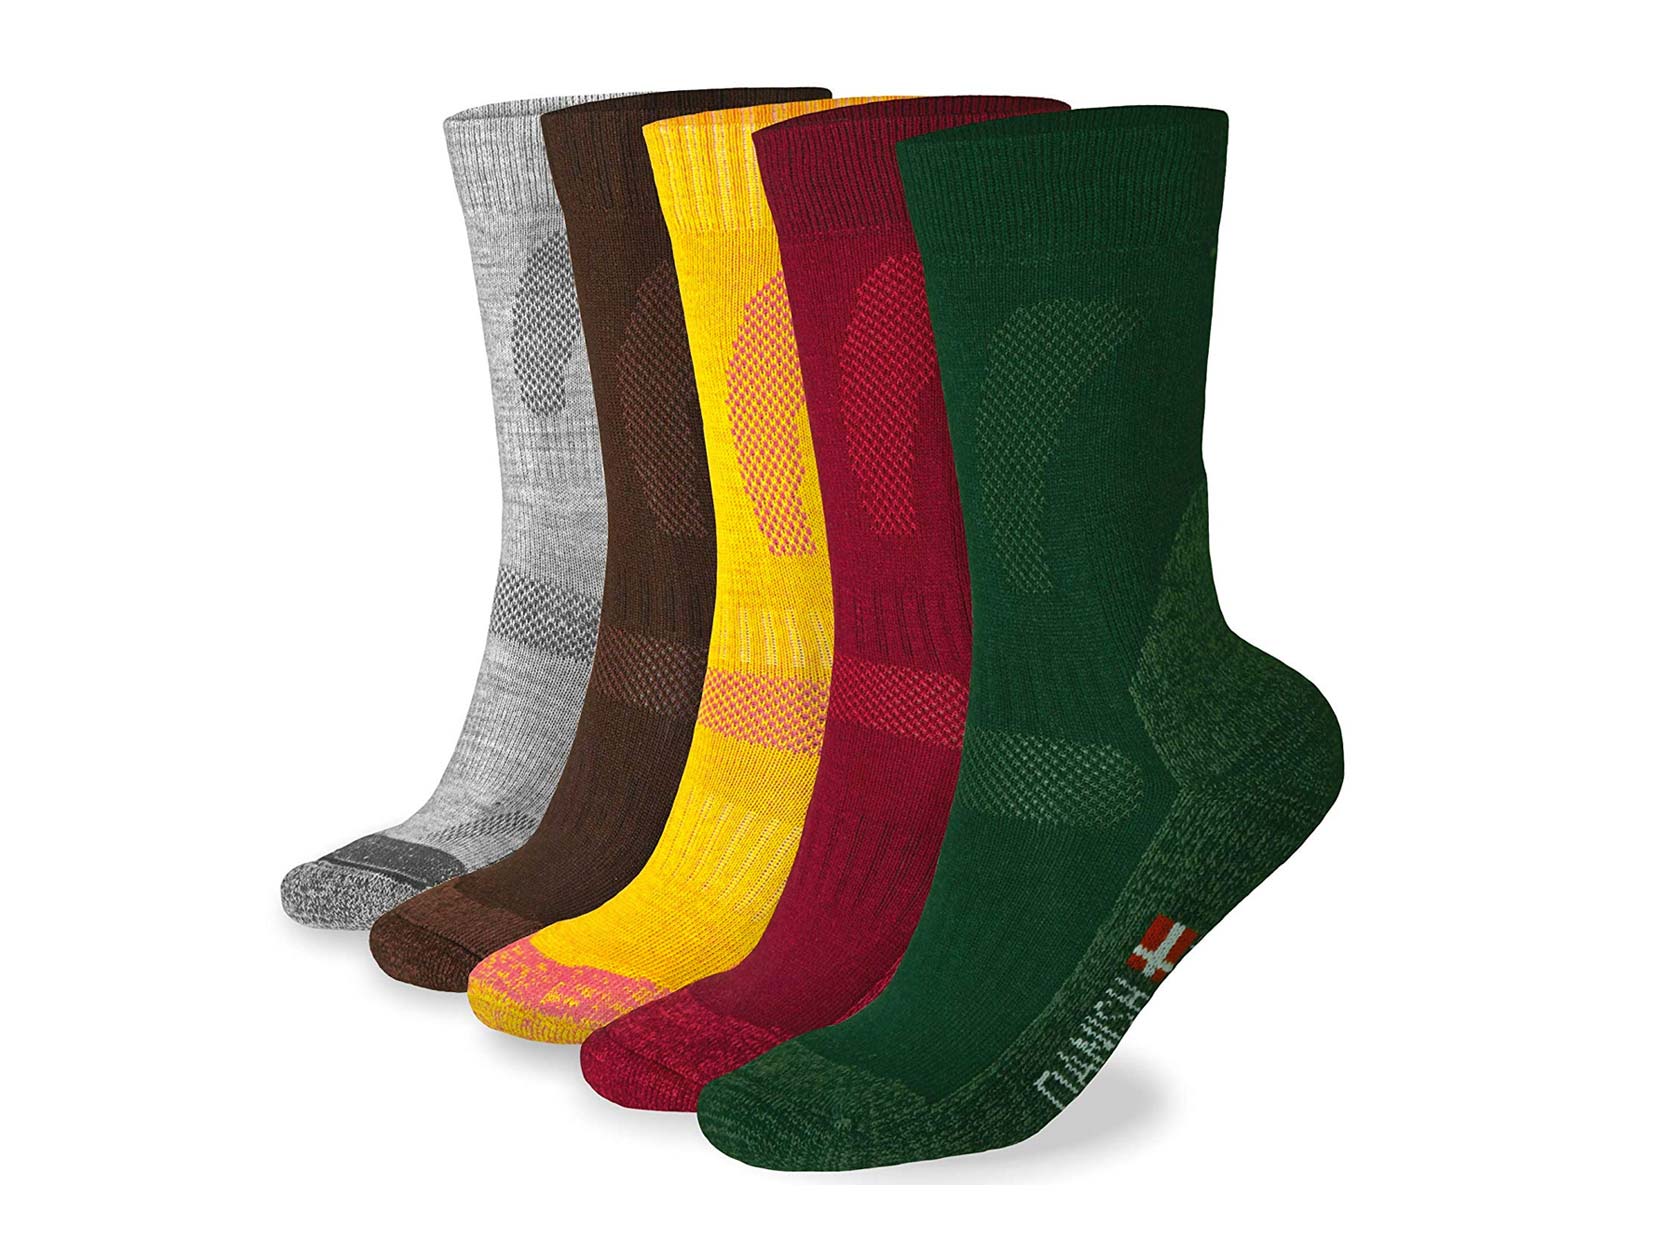 Danish Endurance wool socks